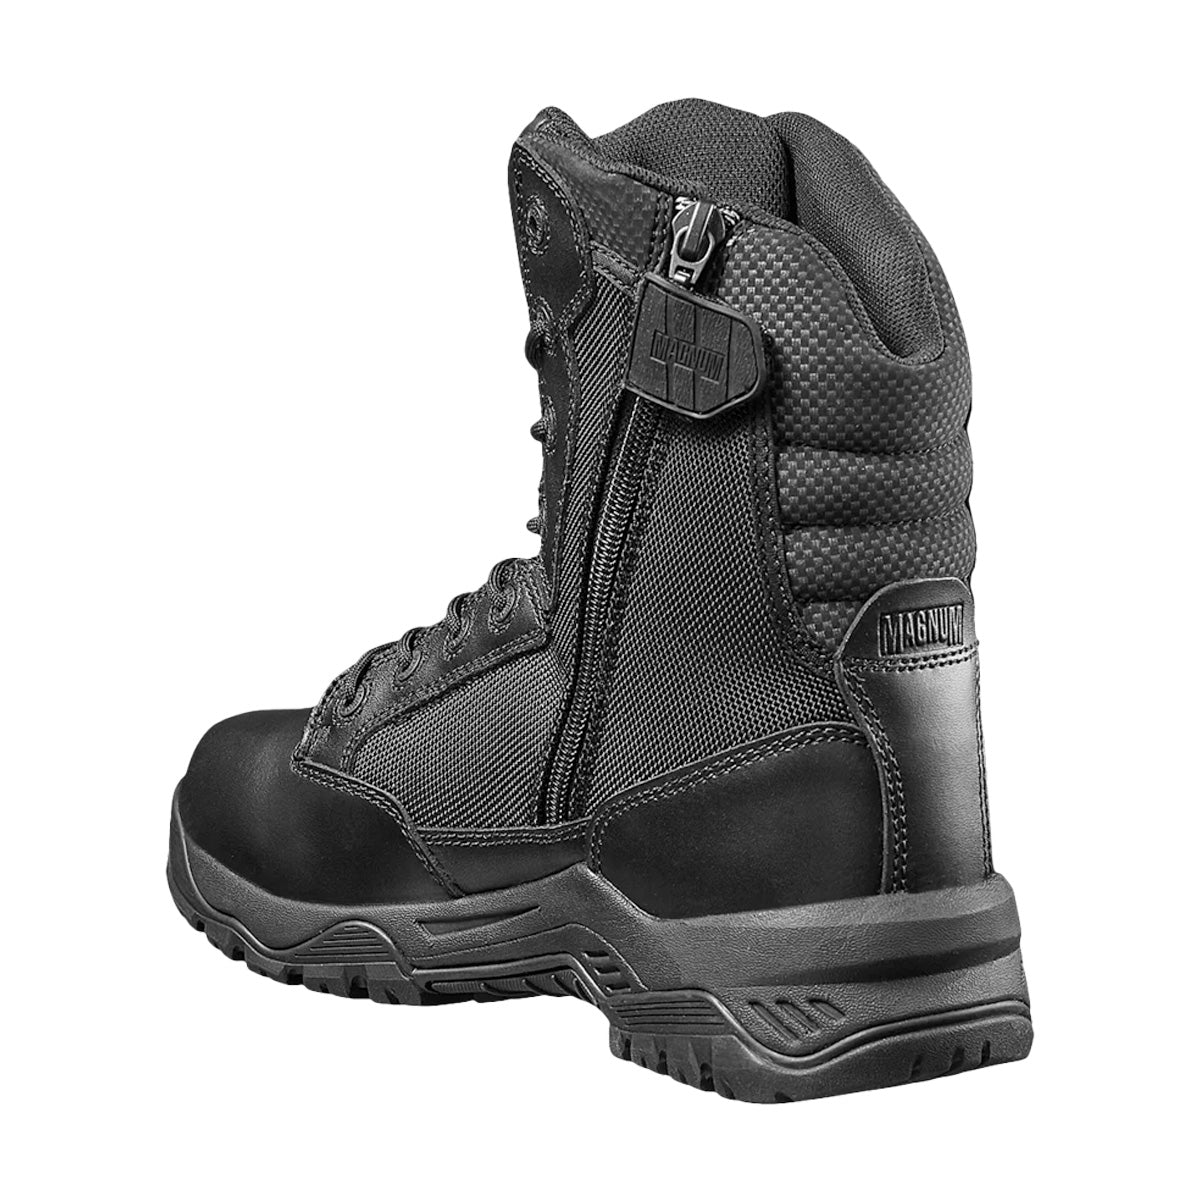 Magnum Strike Force 8.0 Side-Zip Waterproof Women's Boot Black Tactical Distributors Ltd New Zealand